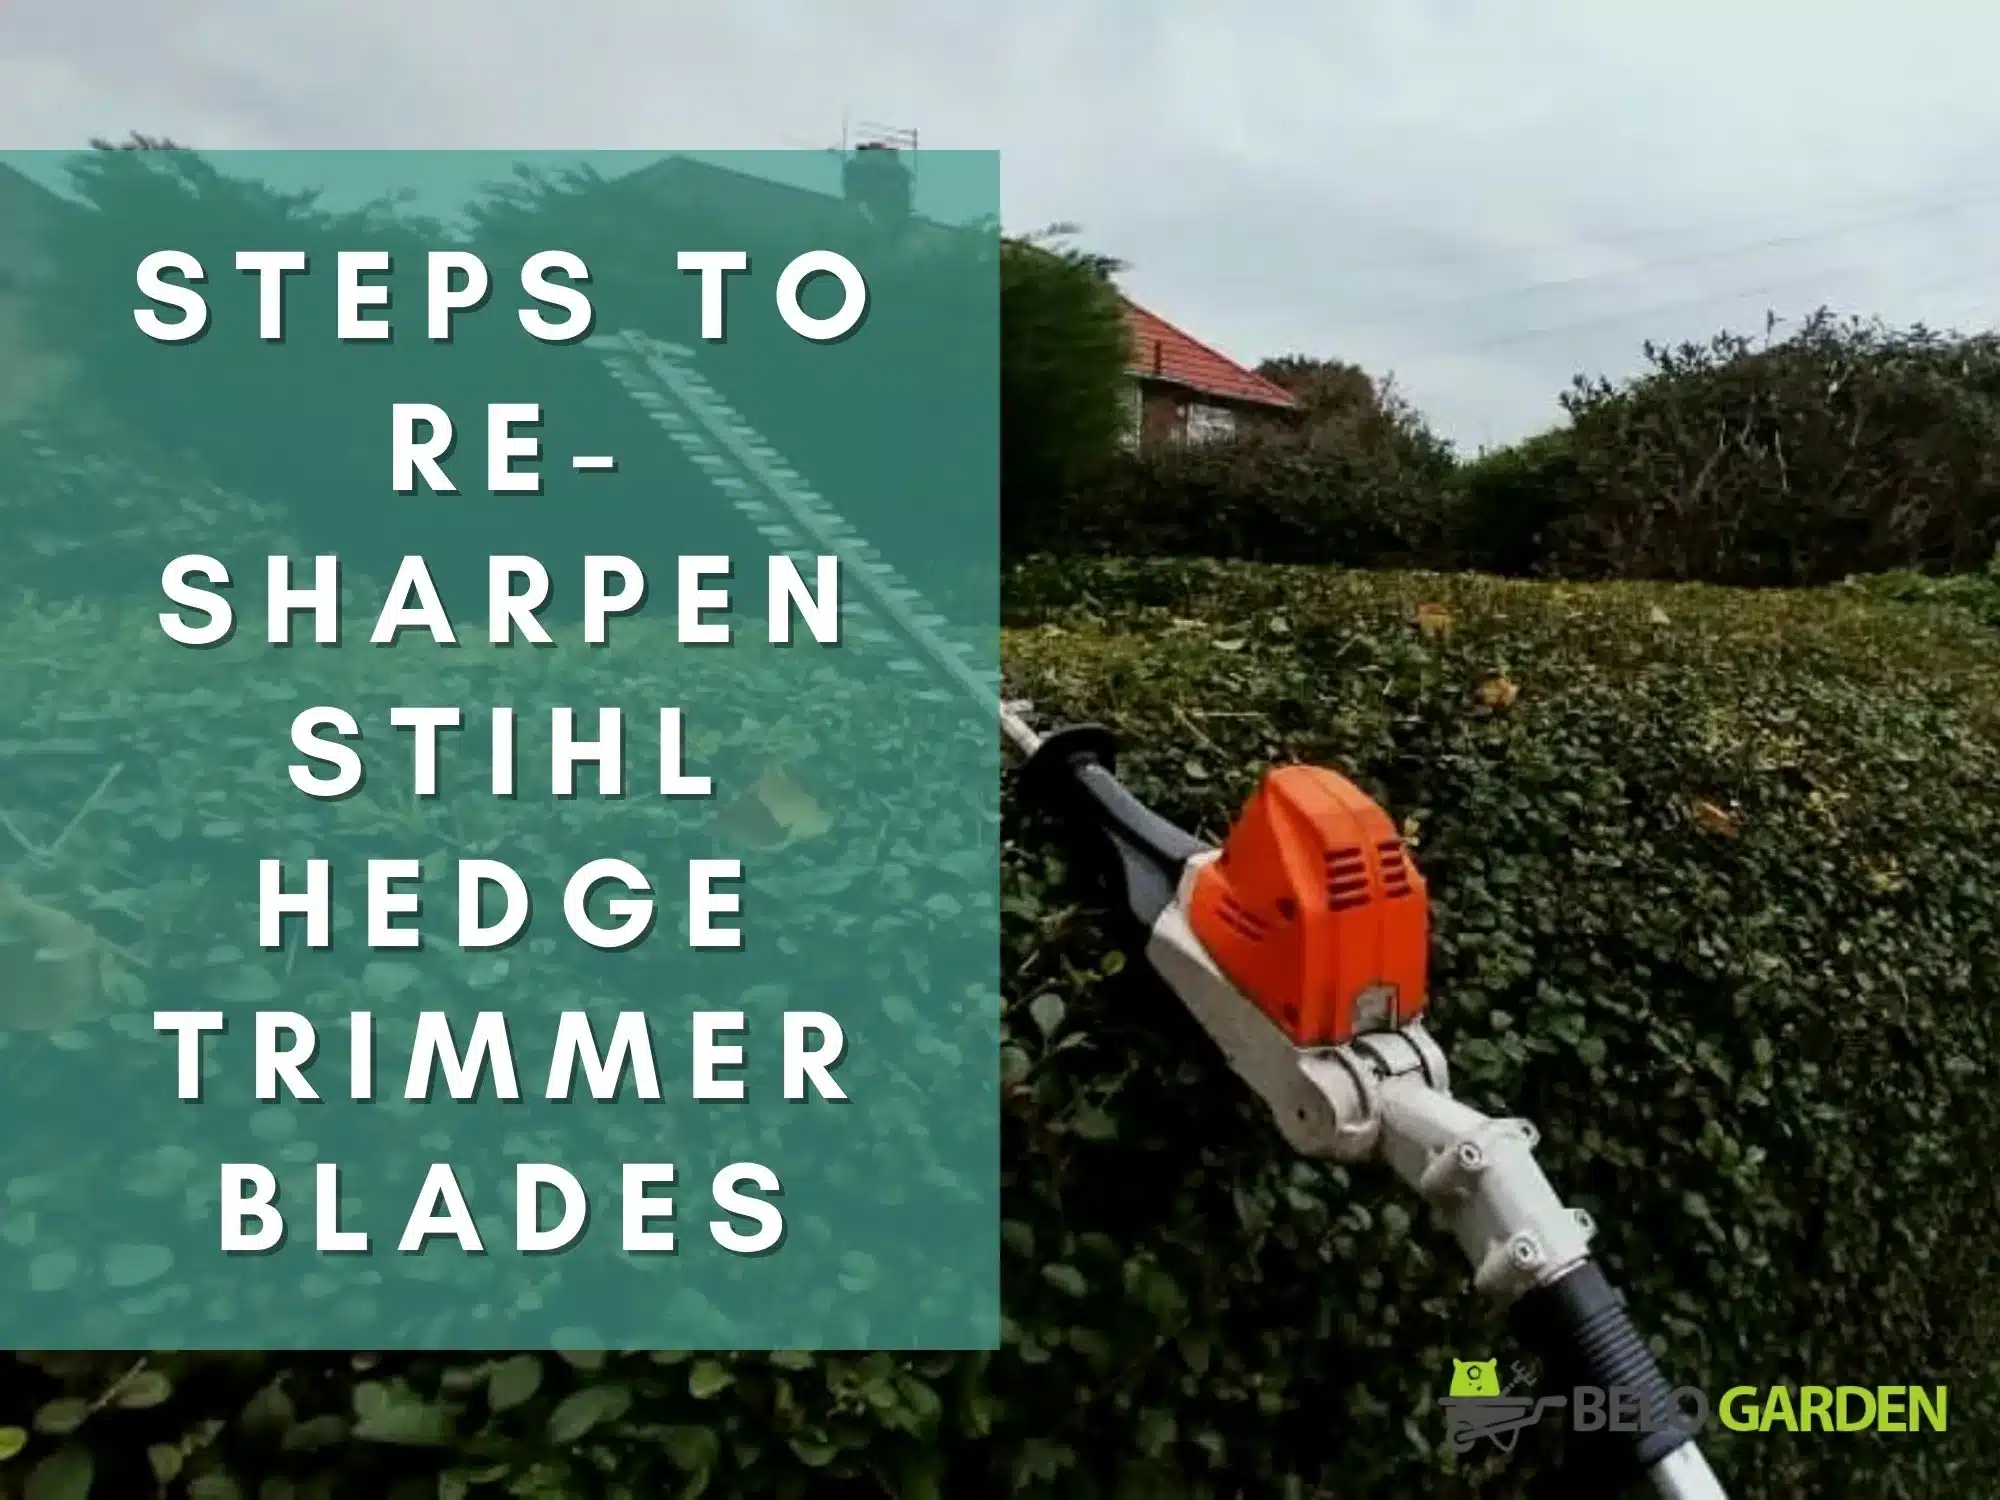 Five Easy Steps to Re-Sharpen Stihl Hedge Trimmer Blades